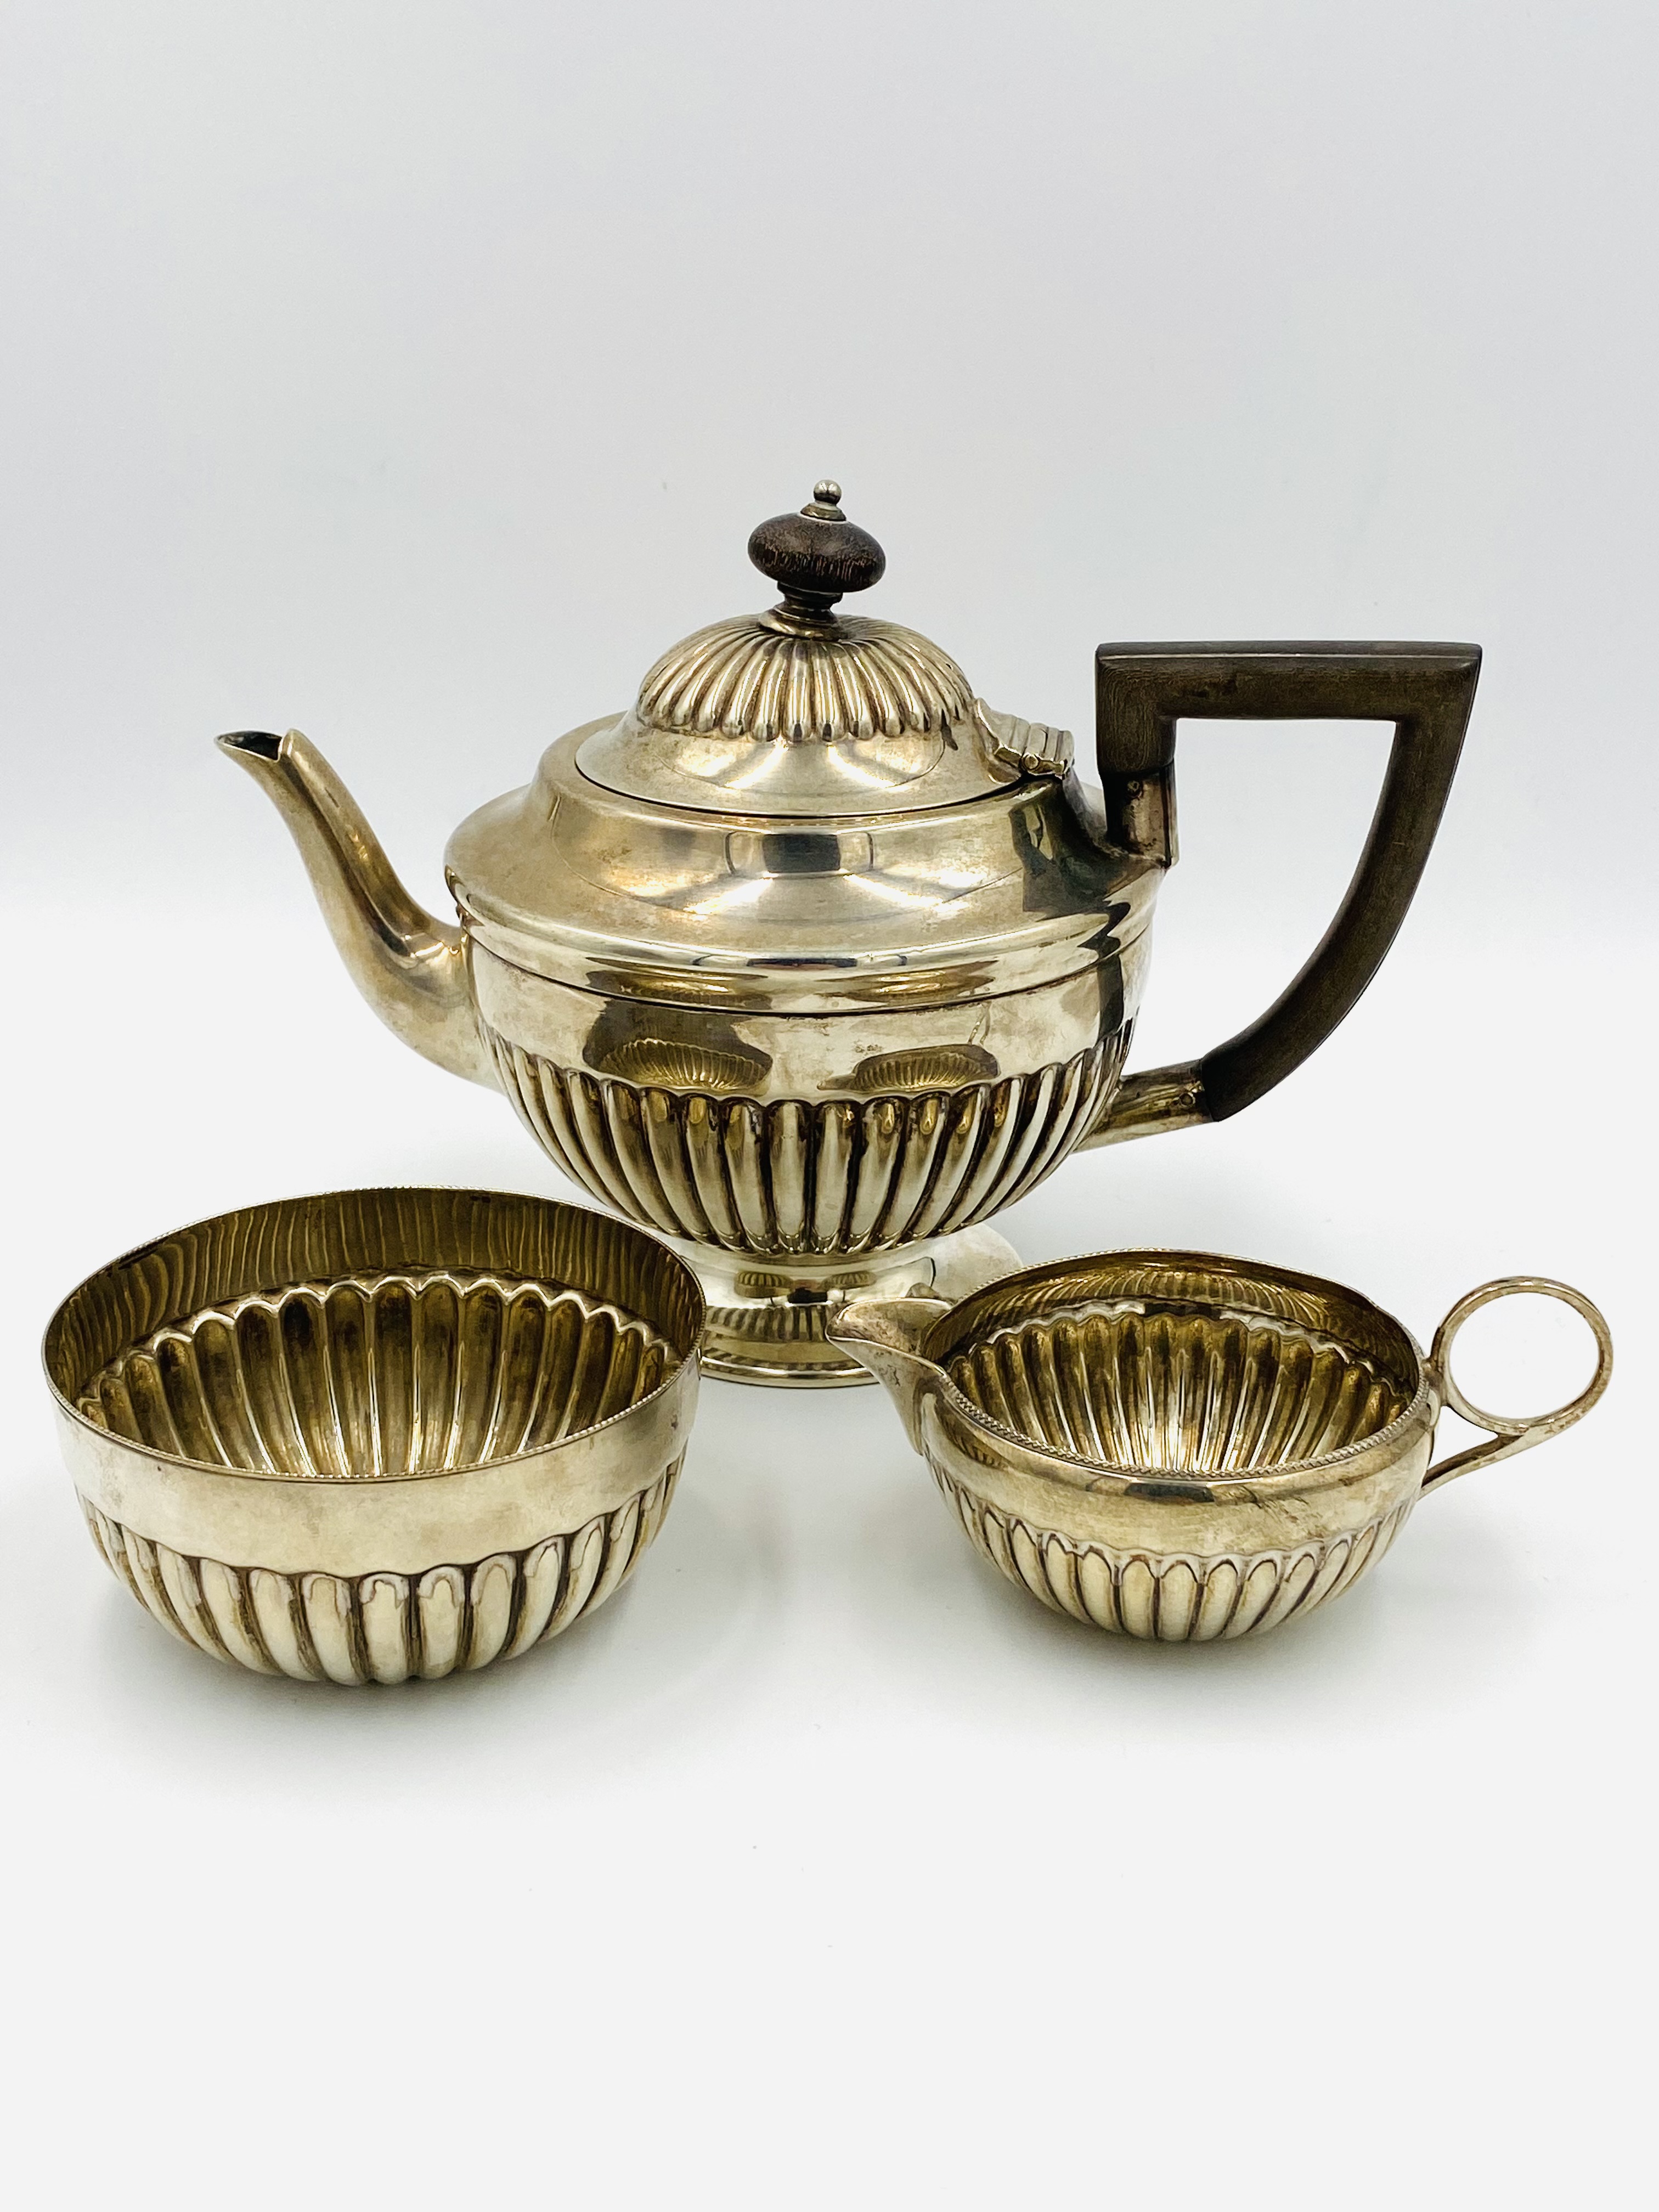 A Mappin & Webb silver batchelor's tea set